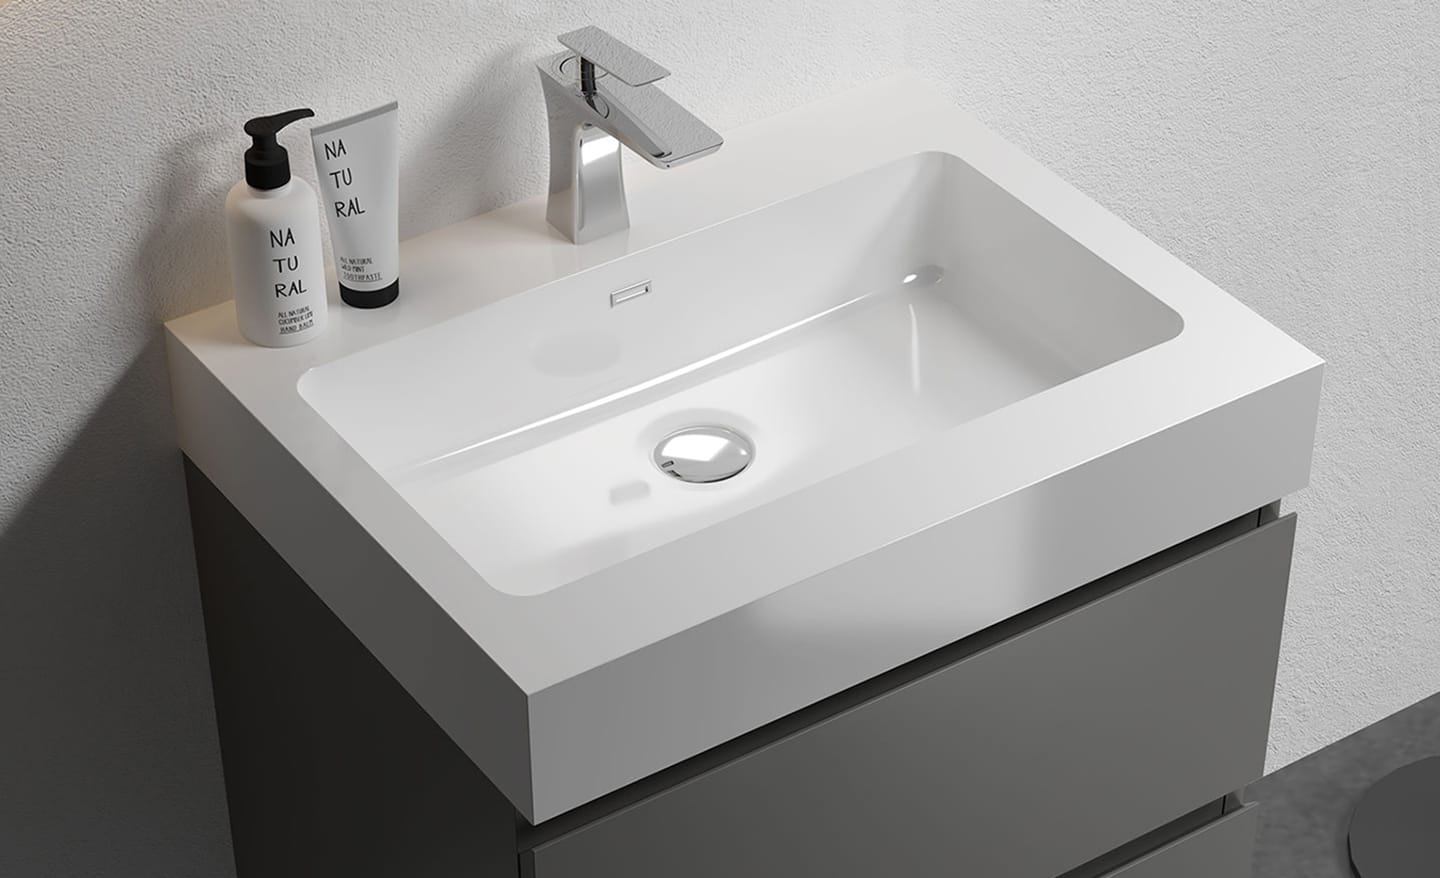 White granite countertop and sink